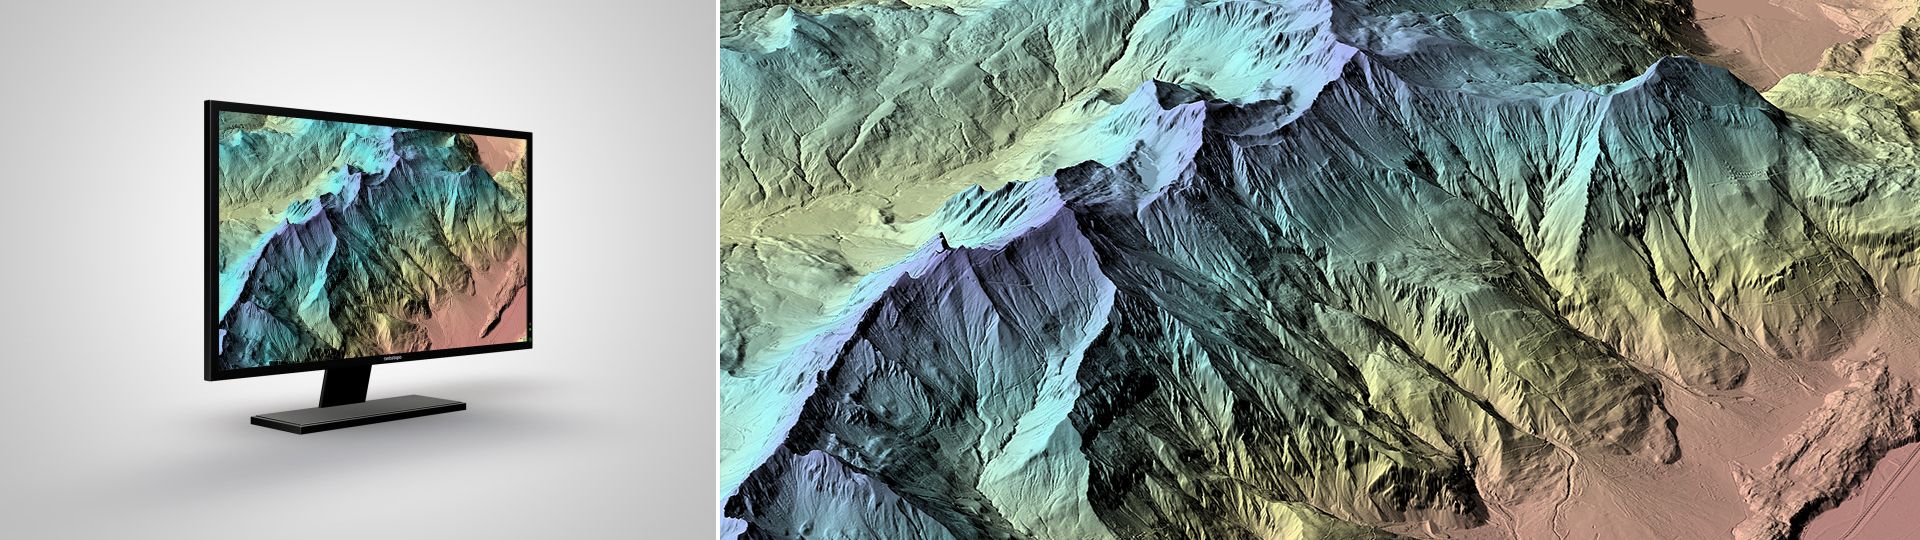 swissALTI3D: the high precision digital elevation model of Switzerland